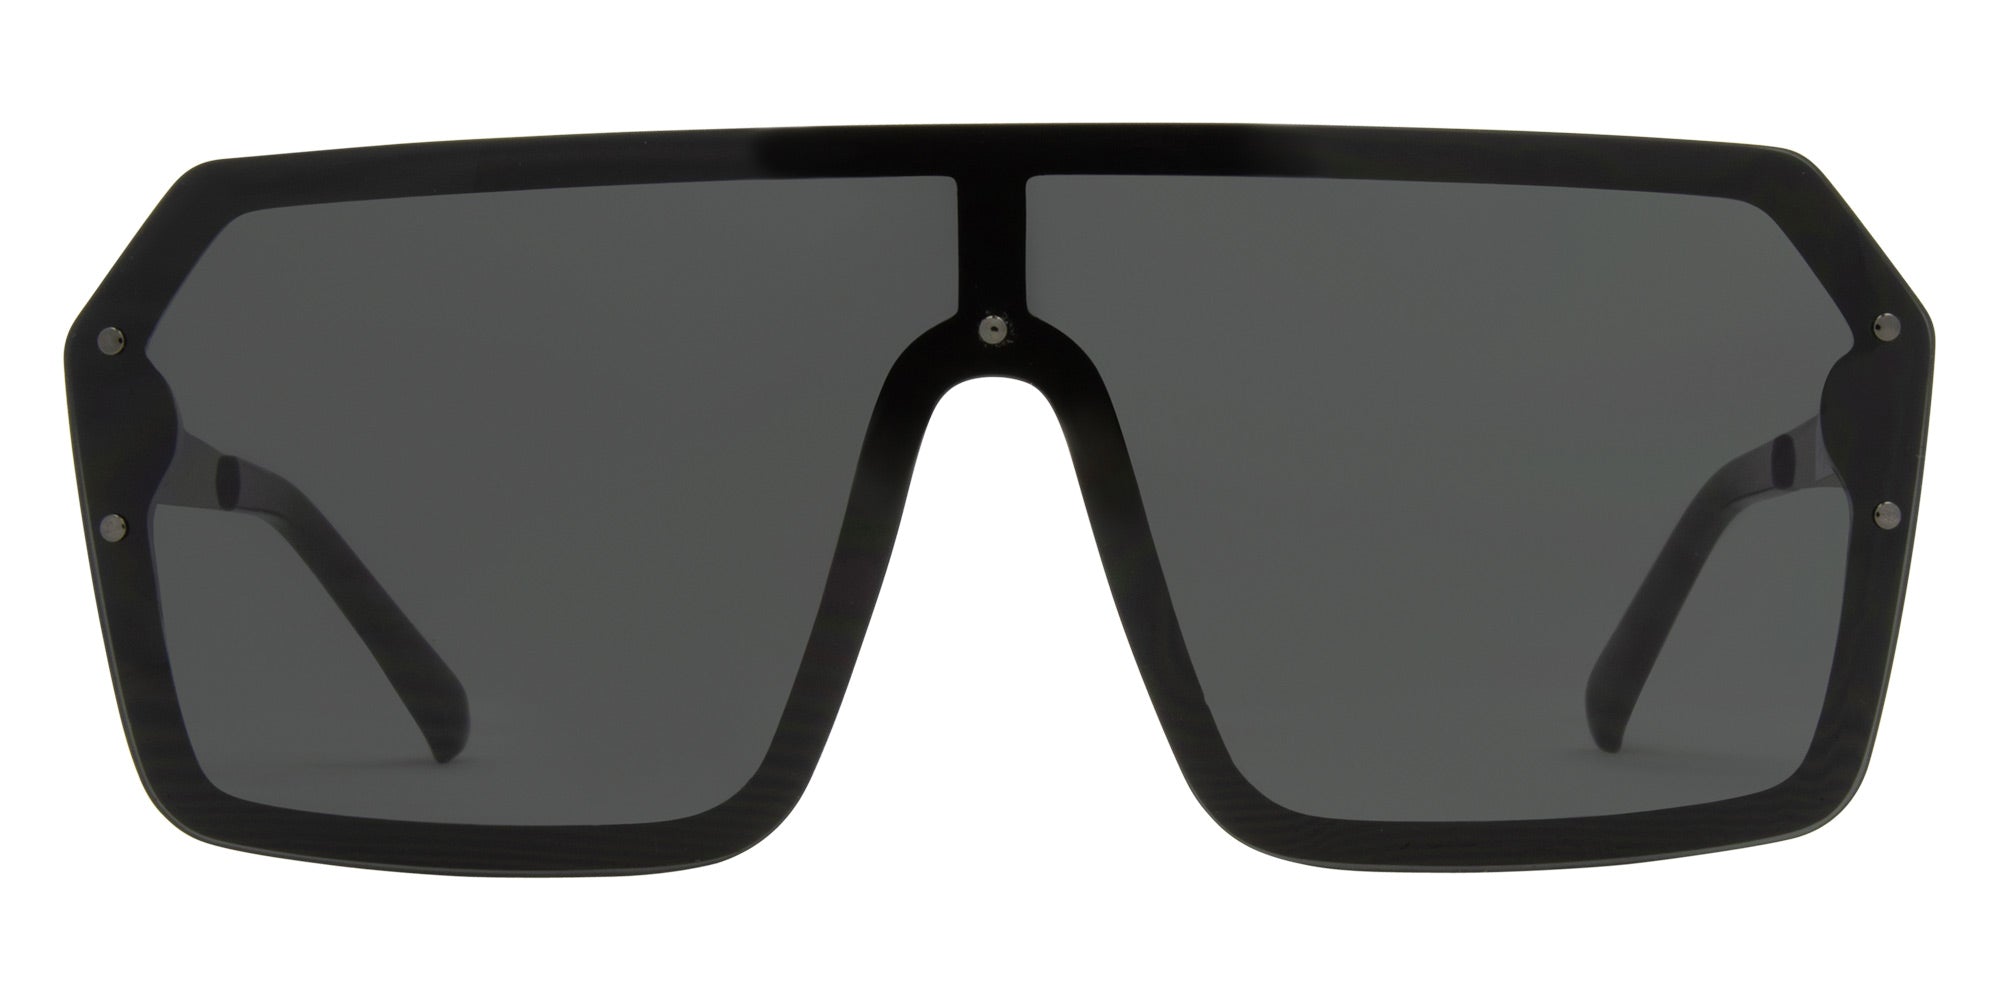 Shop - All New Sunglasses – Translation missing: en.general.meta.page